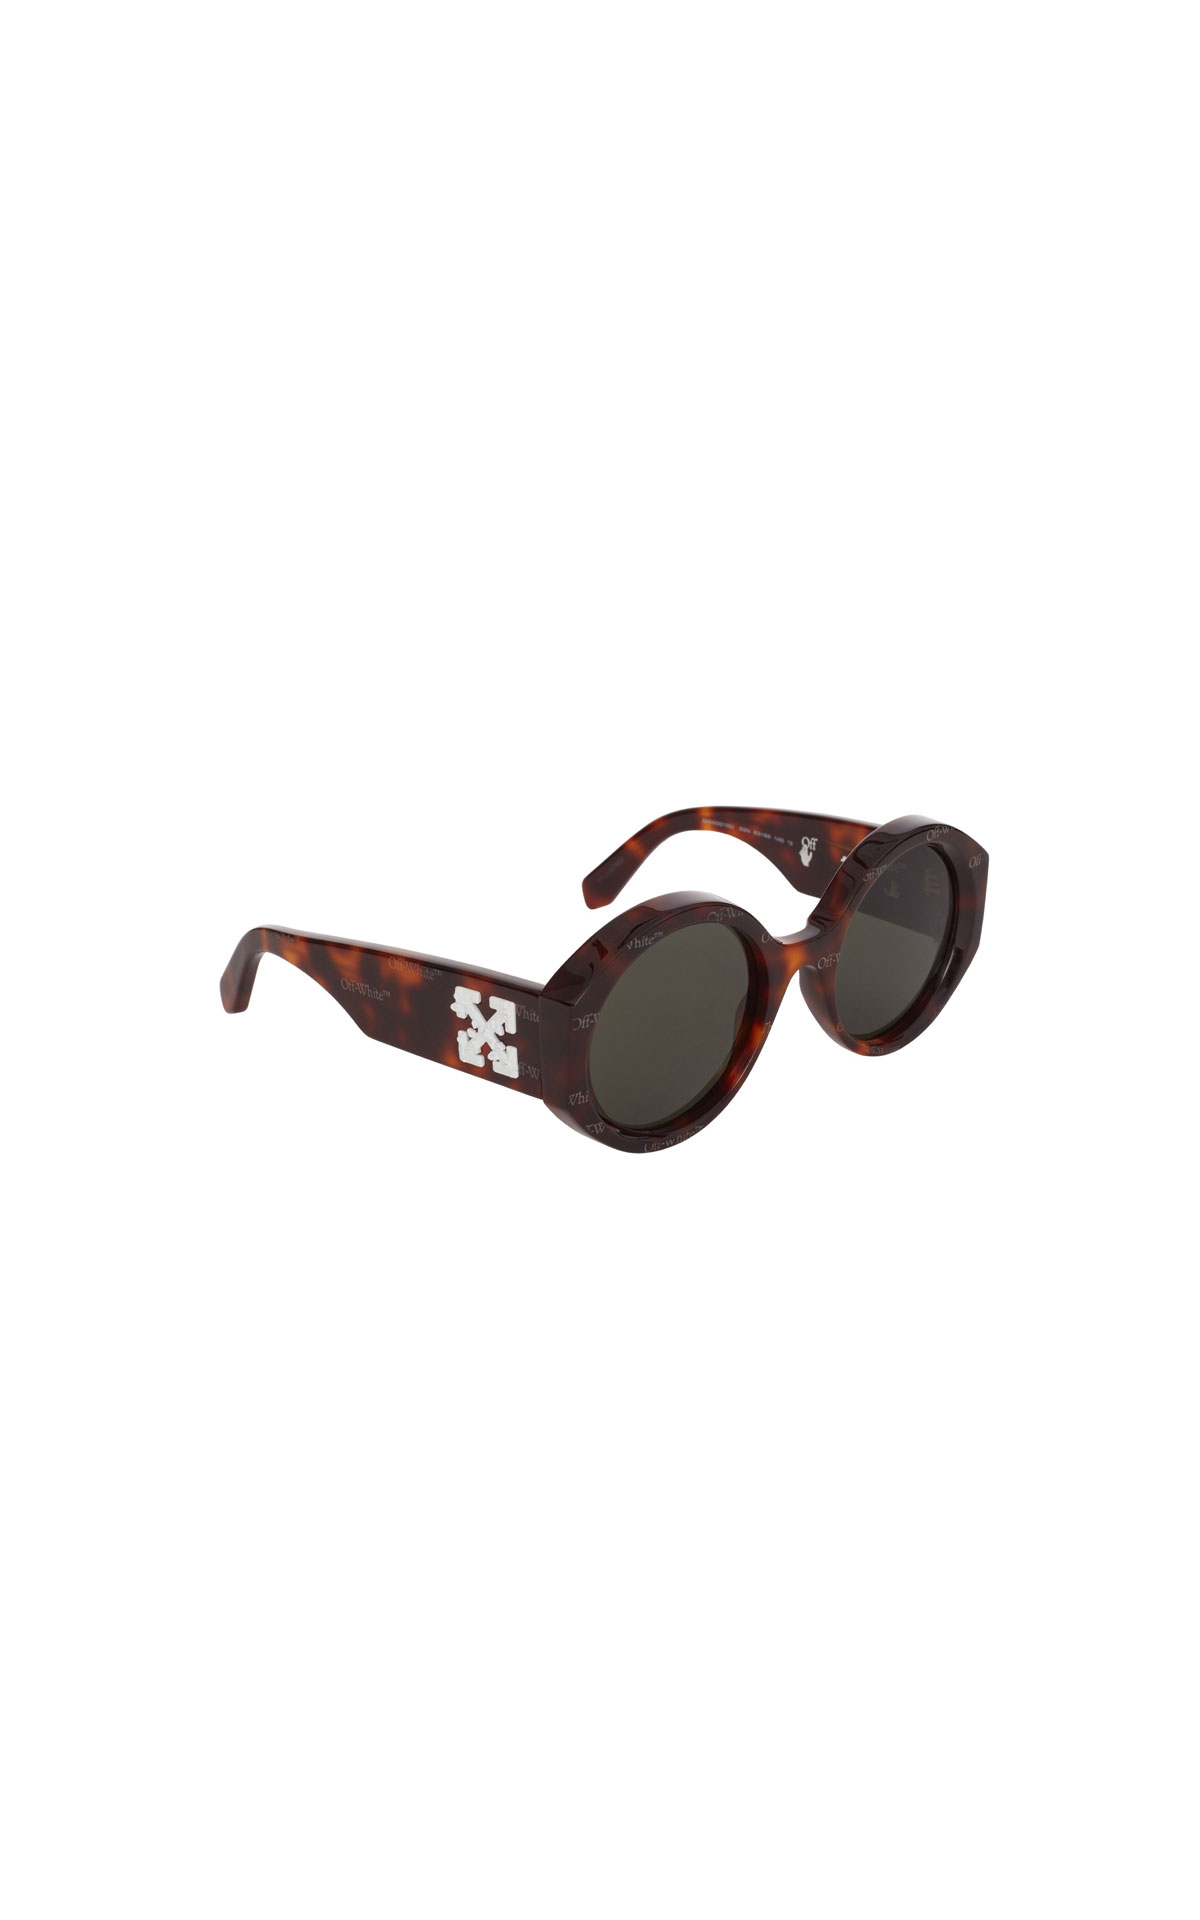 Off-White Havana round sunglasses from Bicester Village